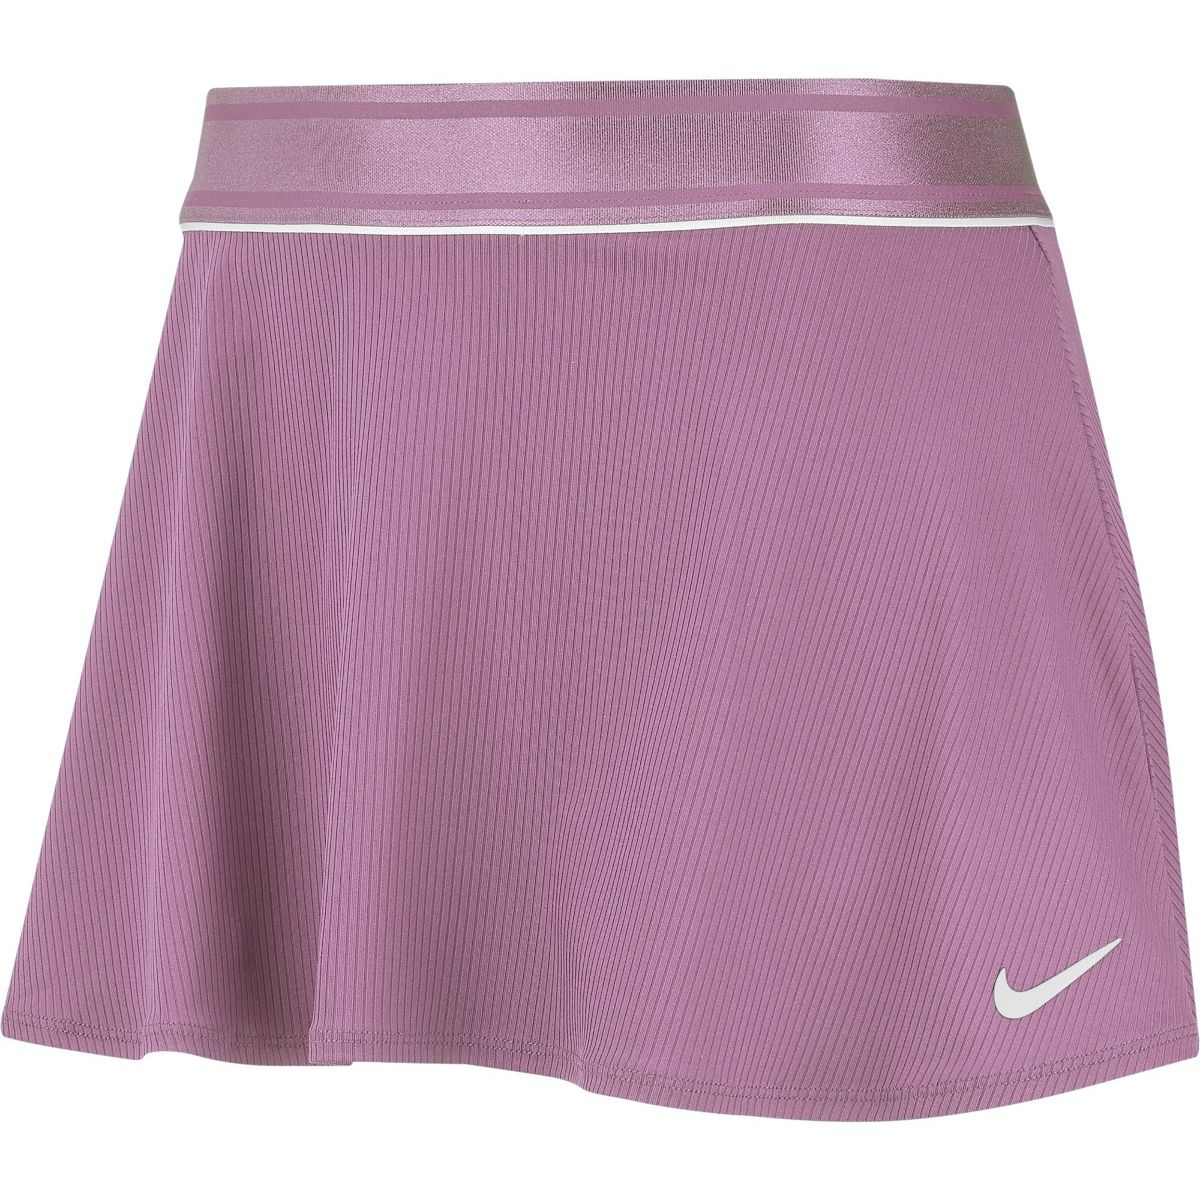 NikeCourt Dry Women's Tennis Skirt 939318-629